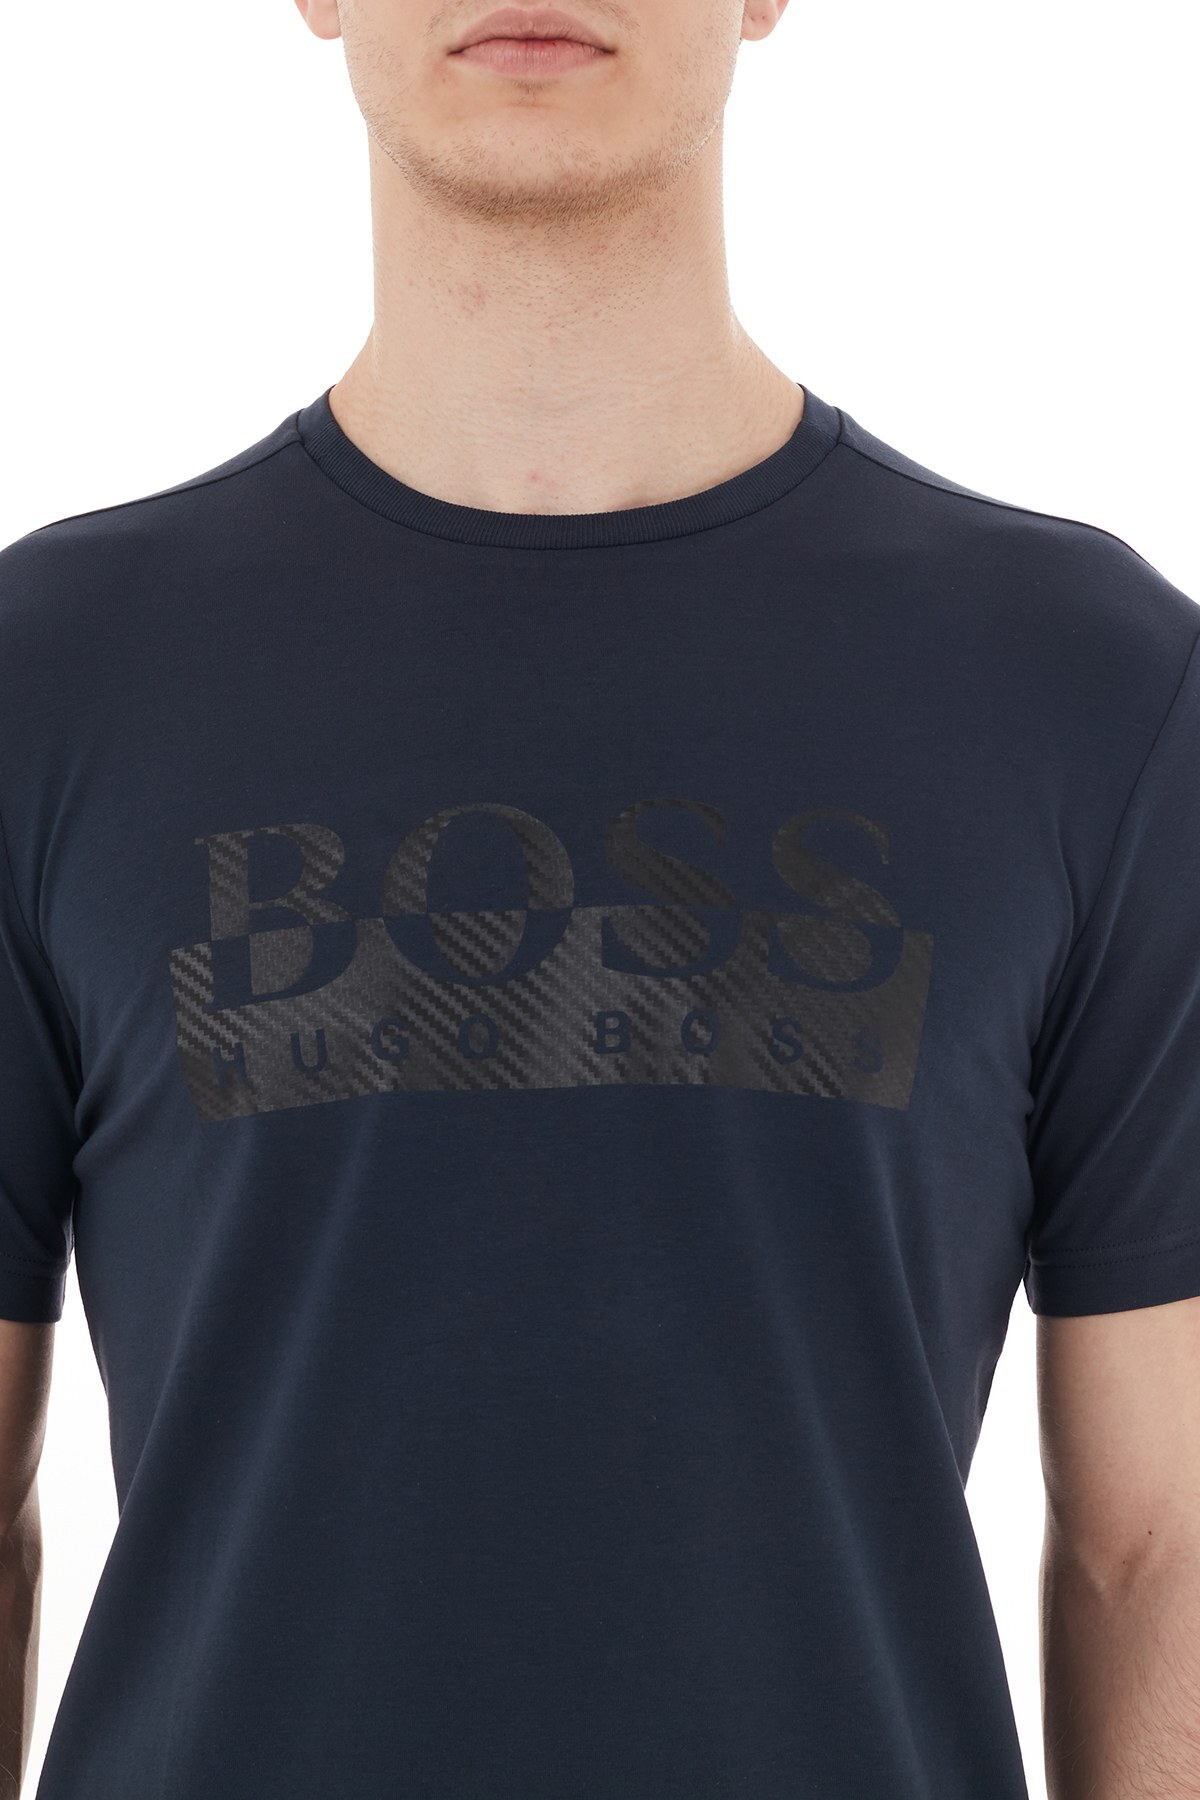 Hugo Boss Regular Fit Logo Baskılı Bisiklet Yaka Pamuklu Erkek T Shirt 50435888 410 LACİVERT